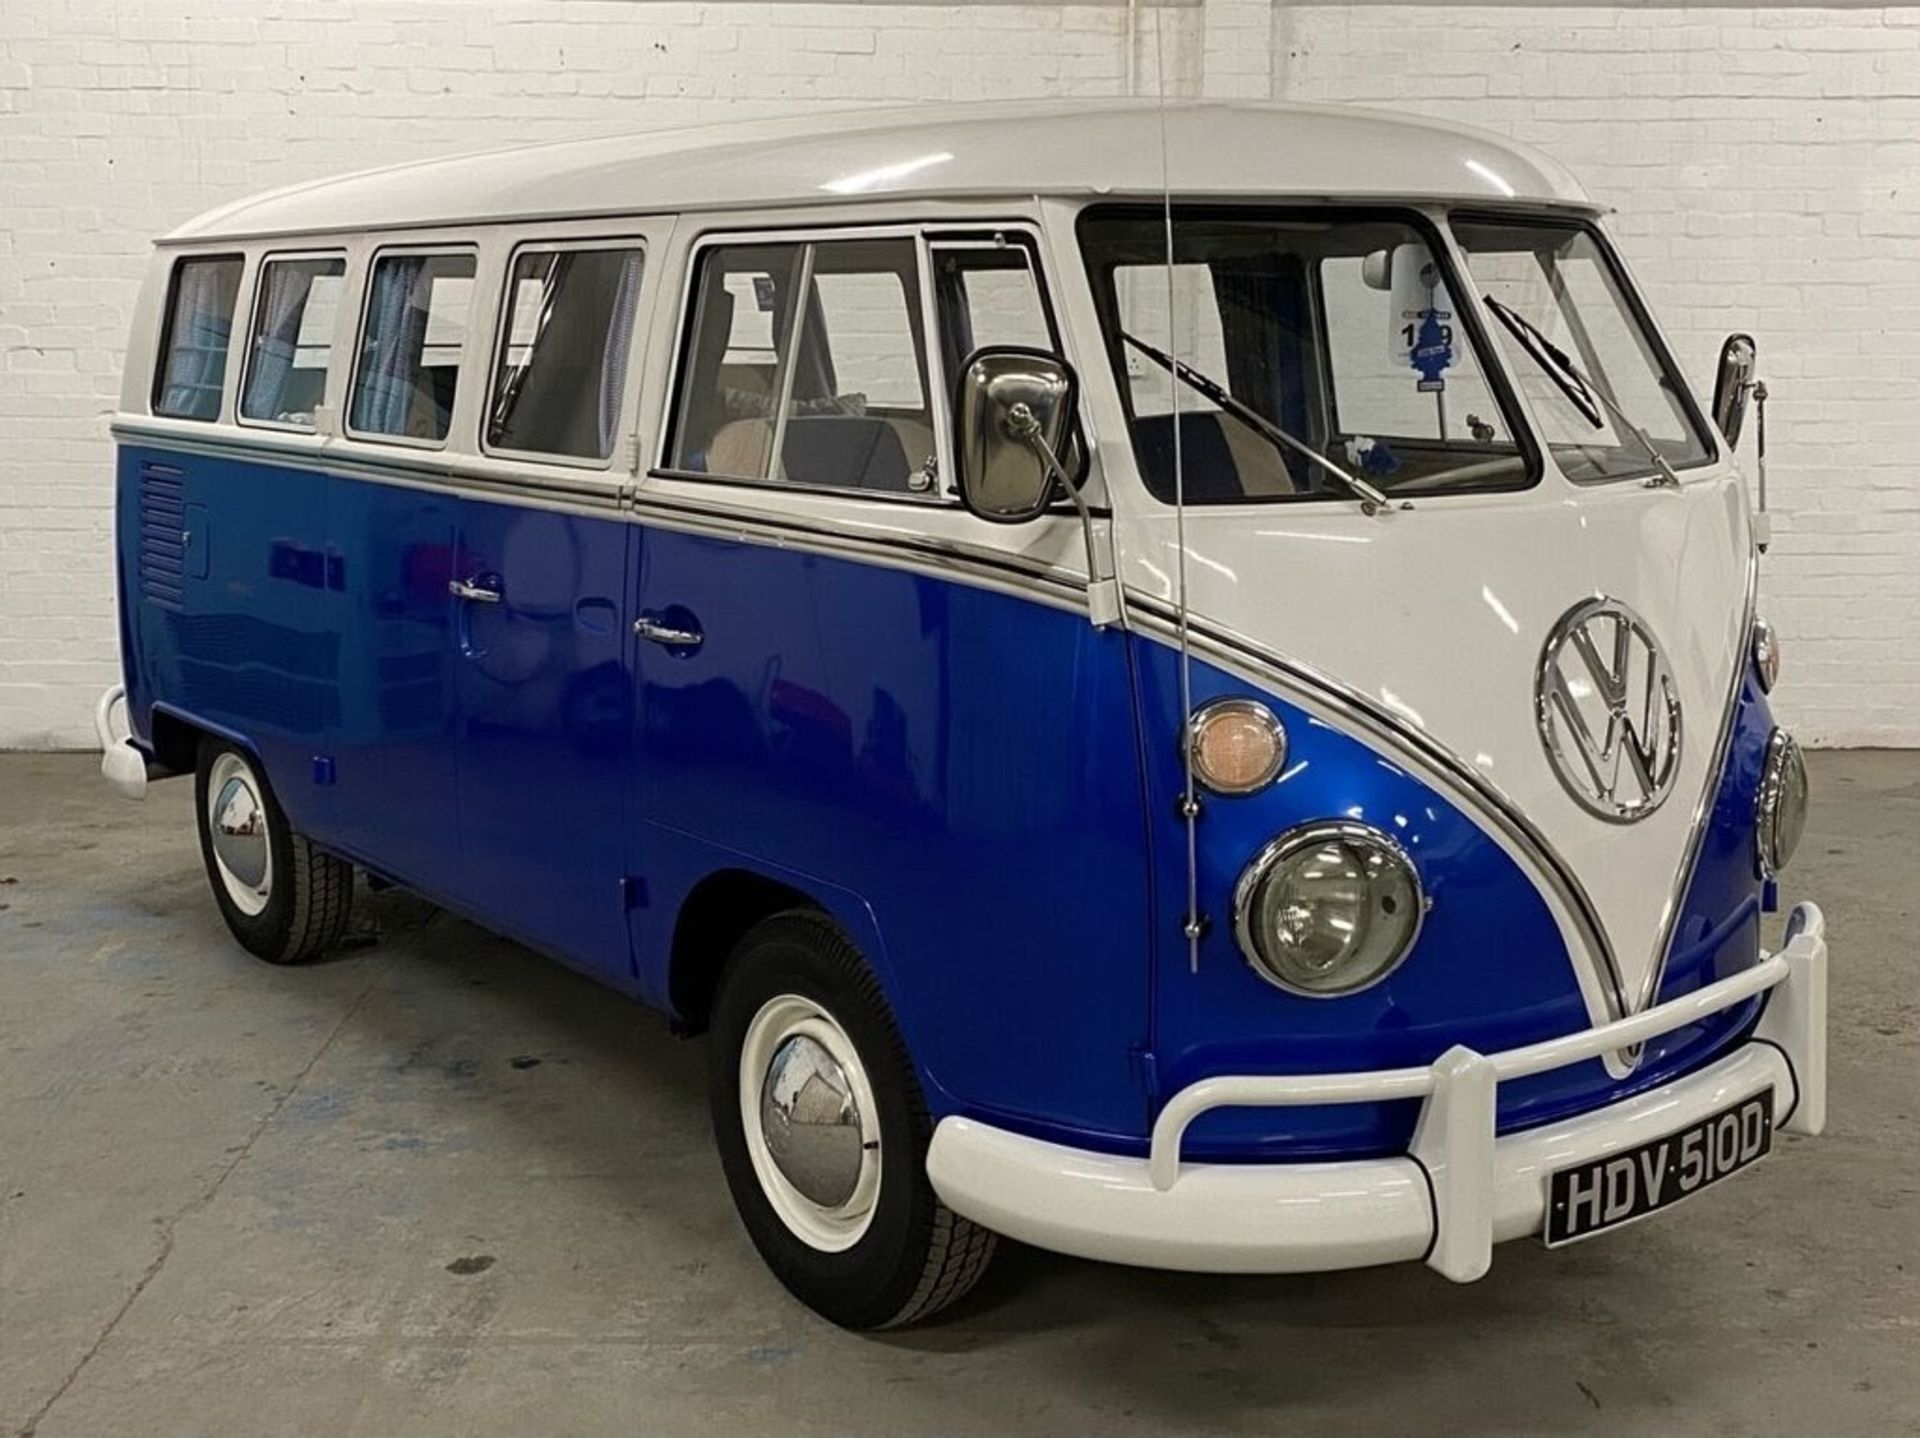 1966 VW 13 Window Deluxe Splitscreen Campervan Registration number HDV 510D Chassis number 256174614 - Image 11 of 25